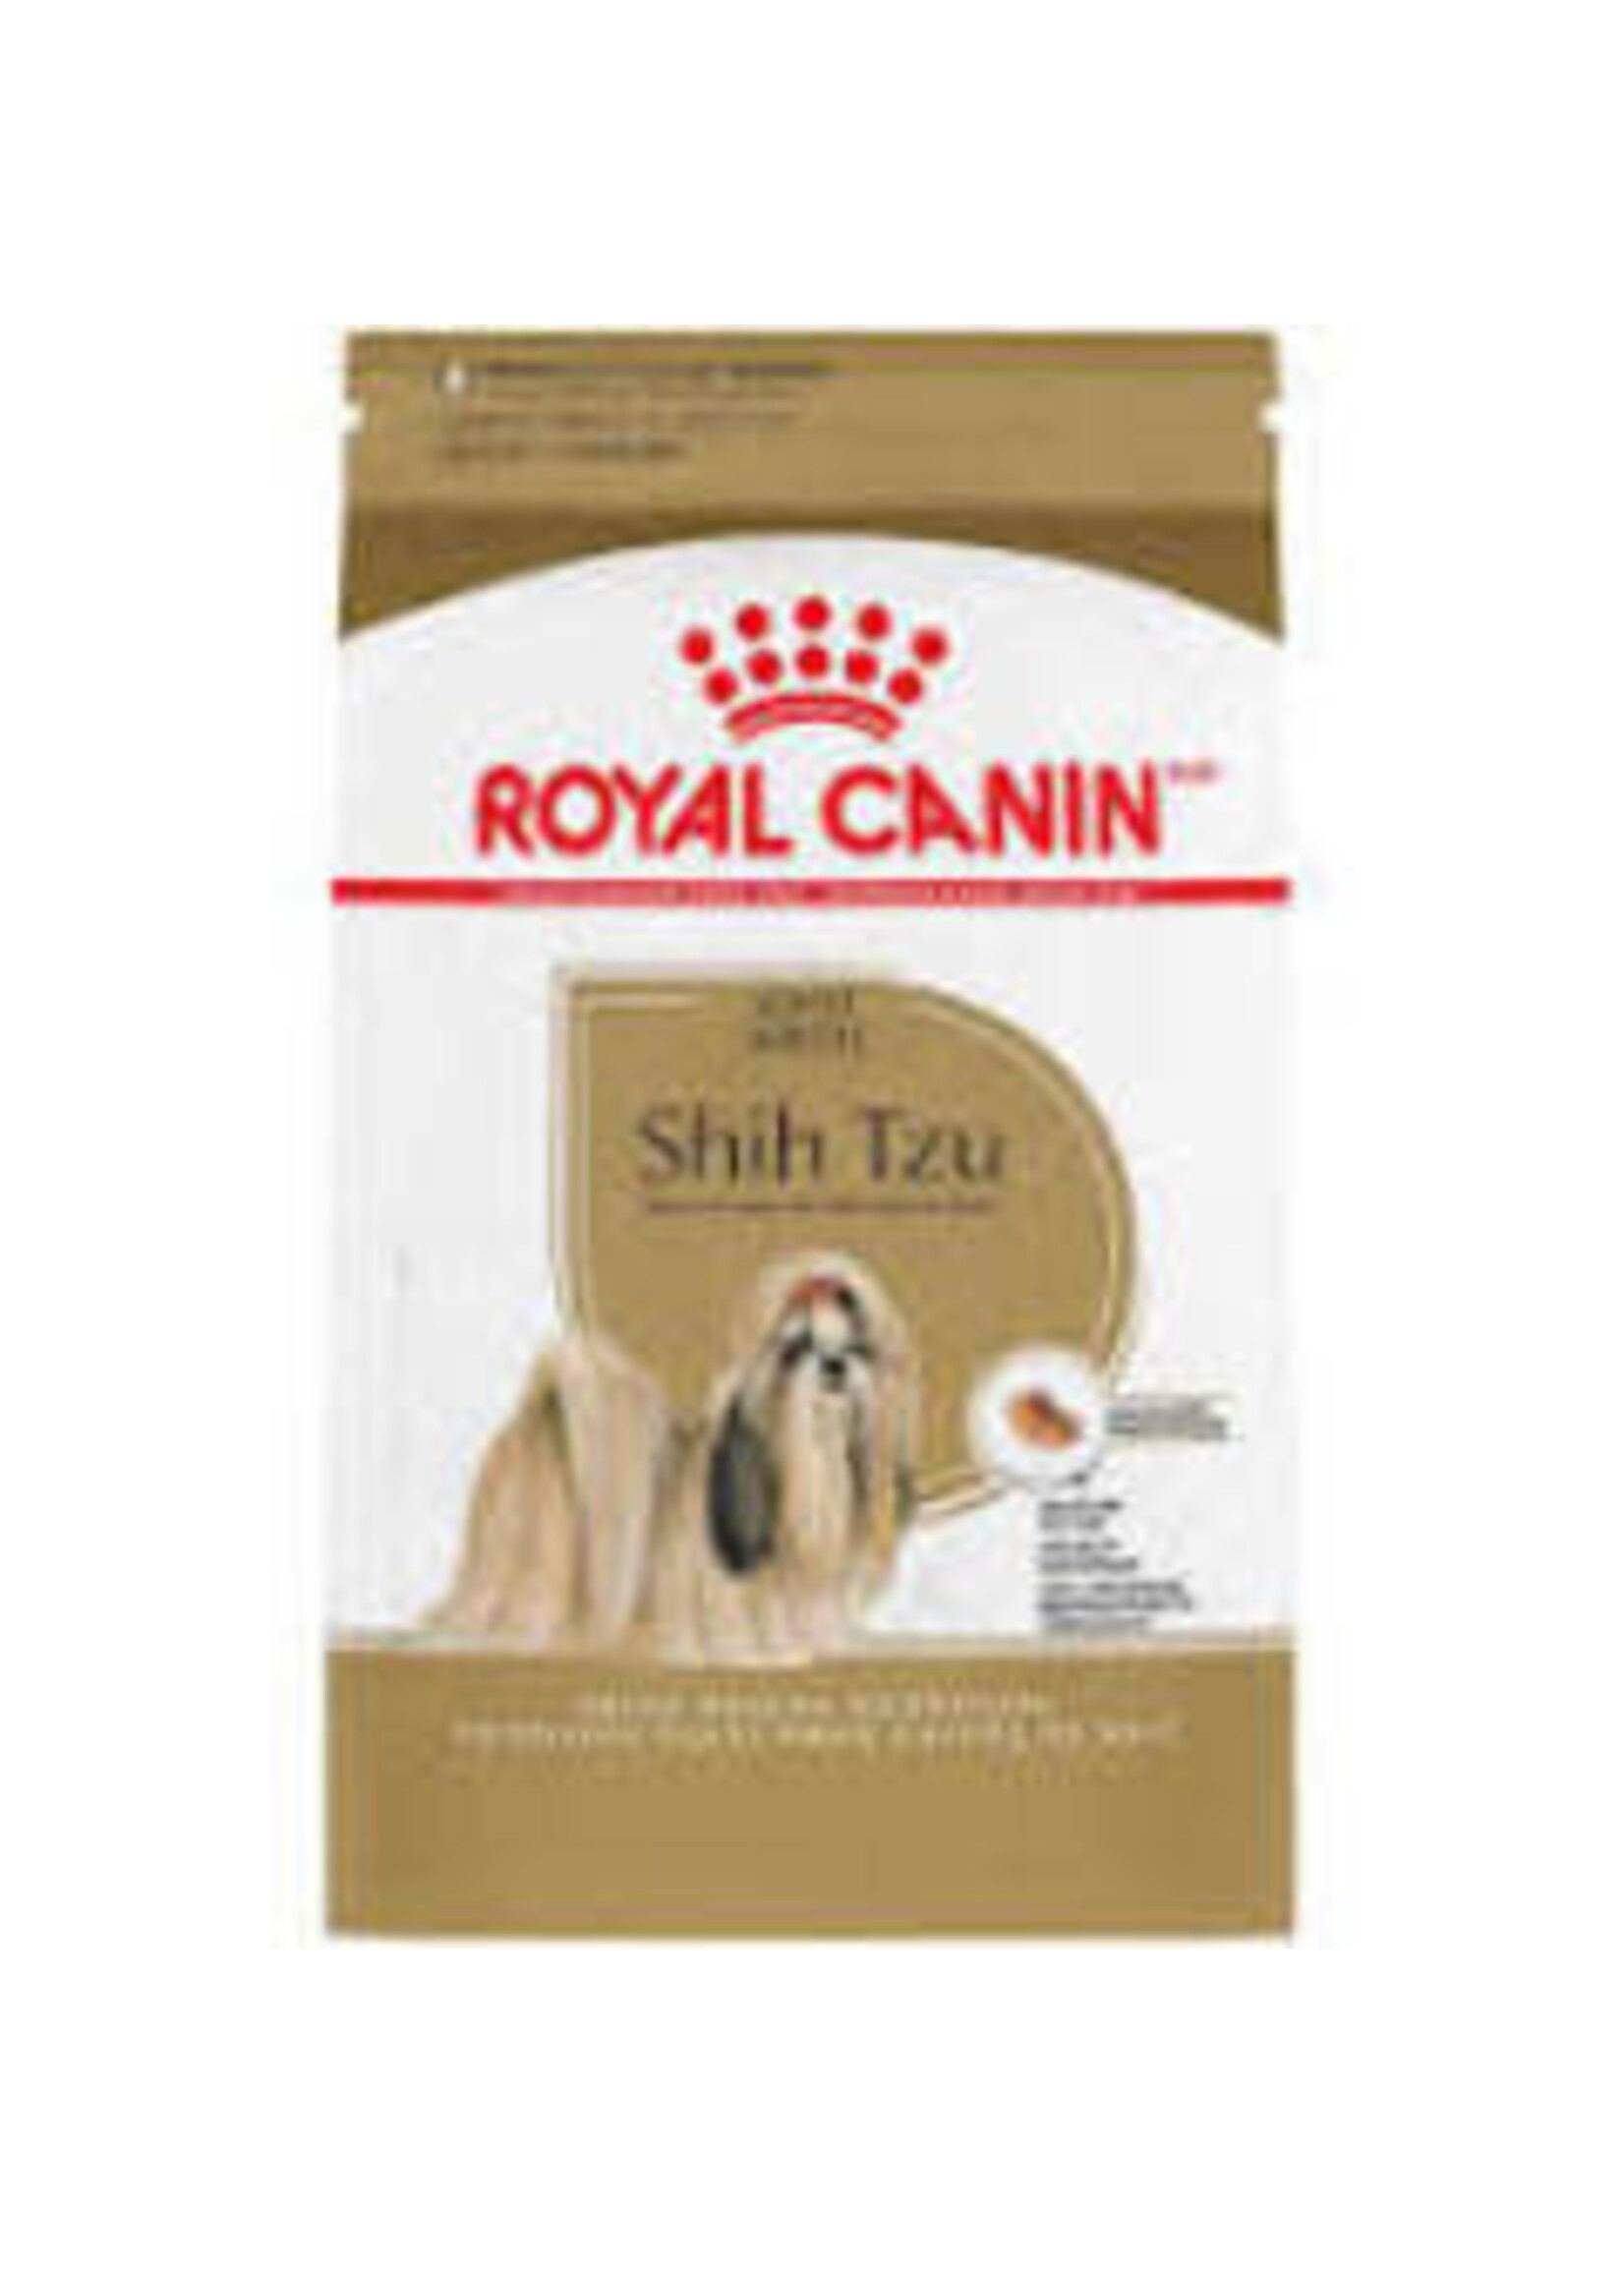 Royal Canin Royal Canin -  Adult Shih Tzu 10lb